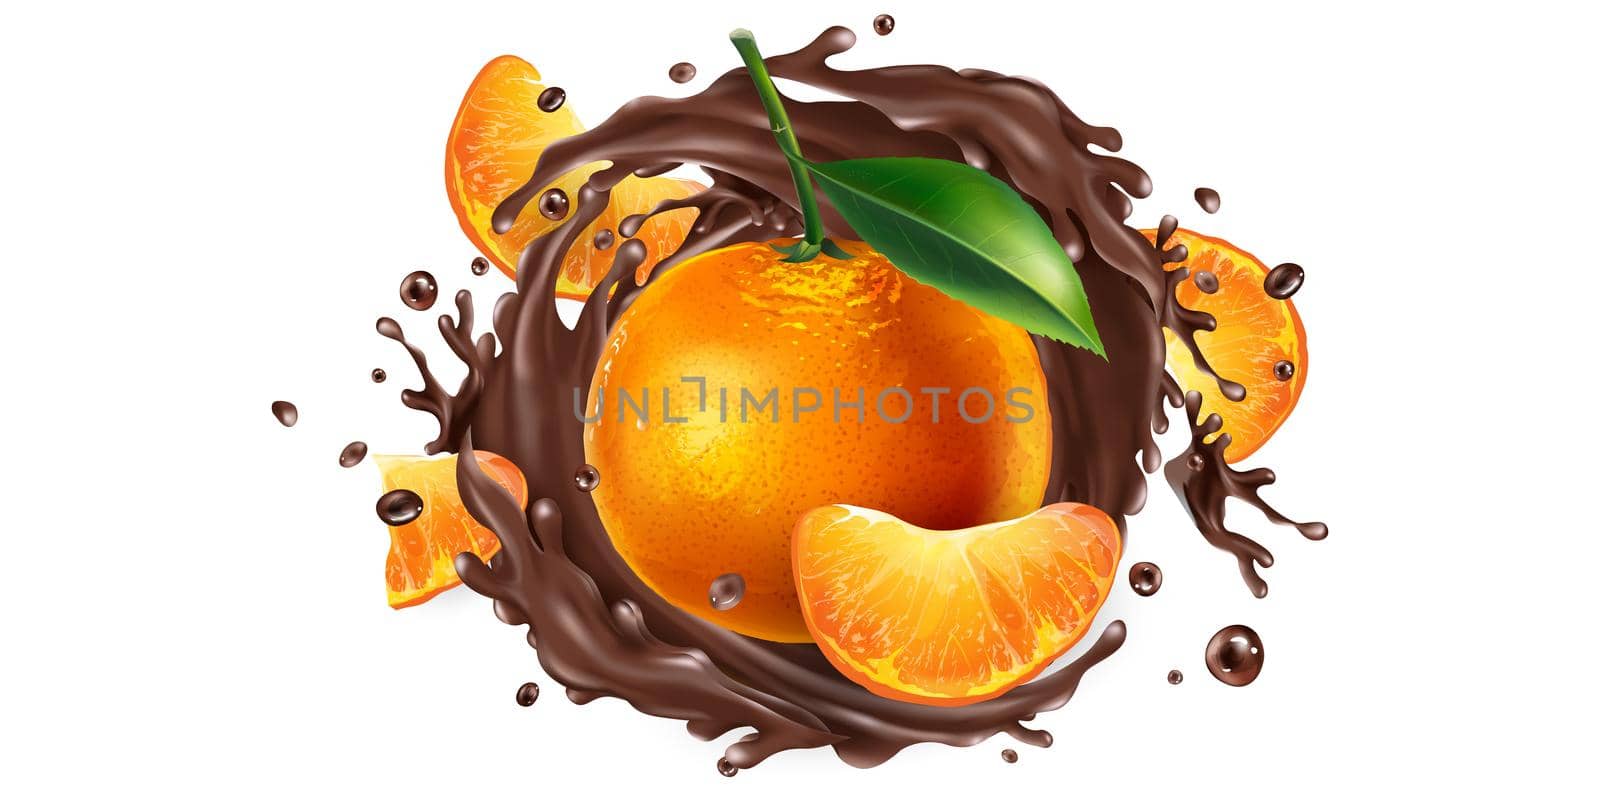 Fresh mandarins and a splash of liquid chocolate on a white background. Realistic style illustration.